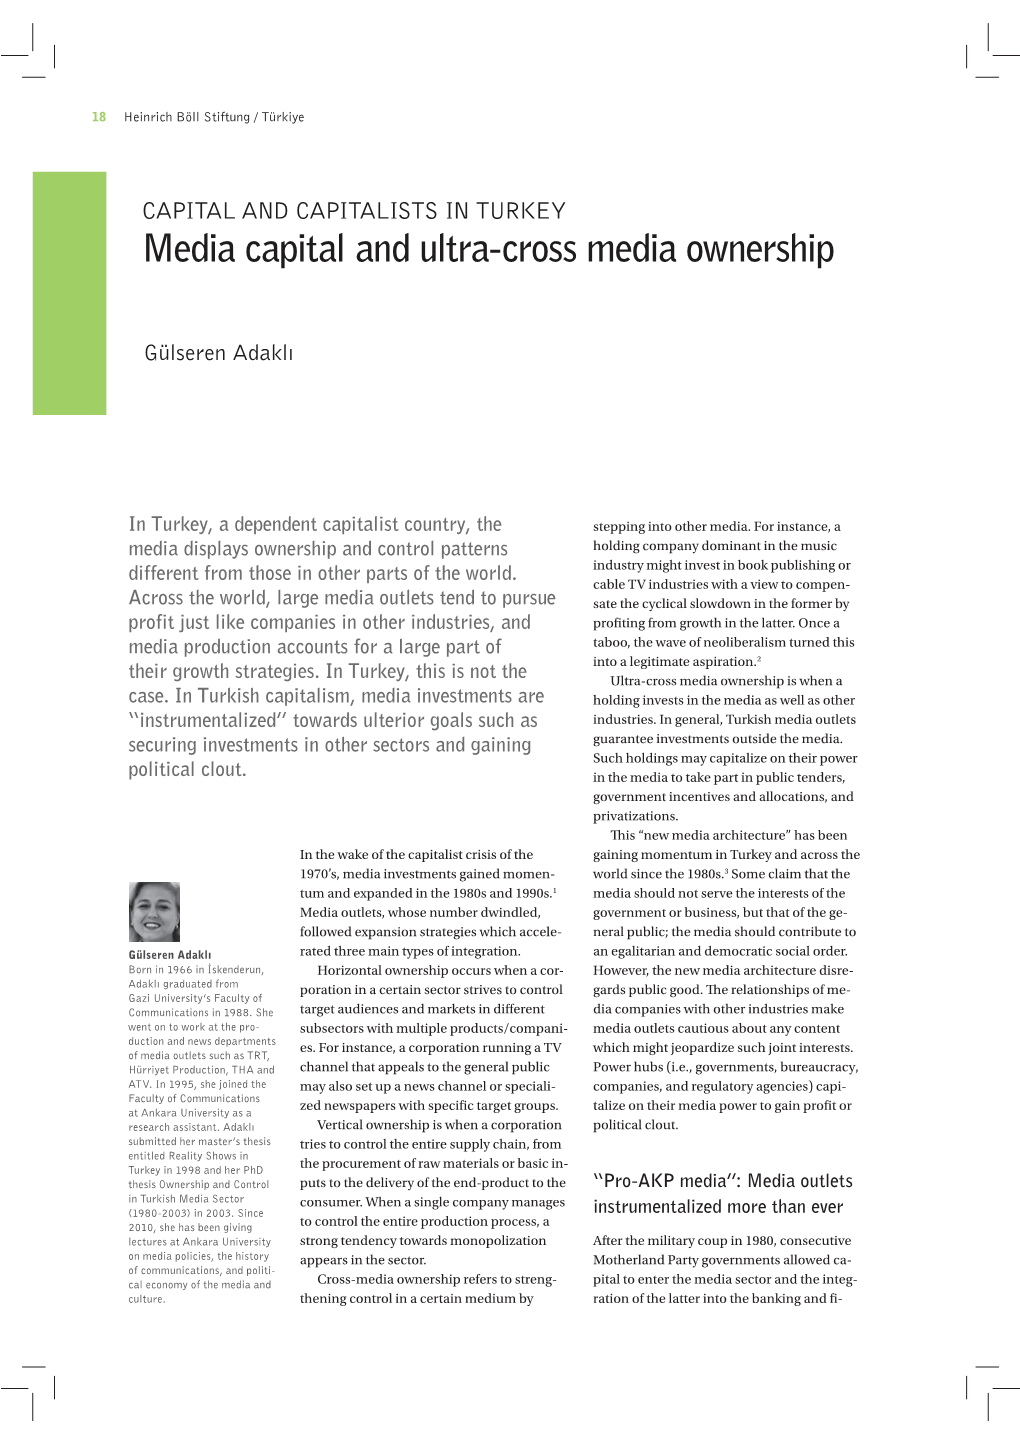 Media Capital and Ultra-Cross Media Ownership